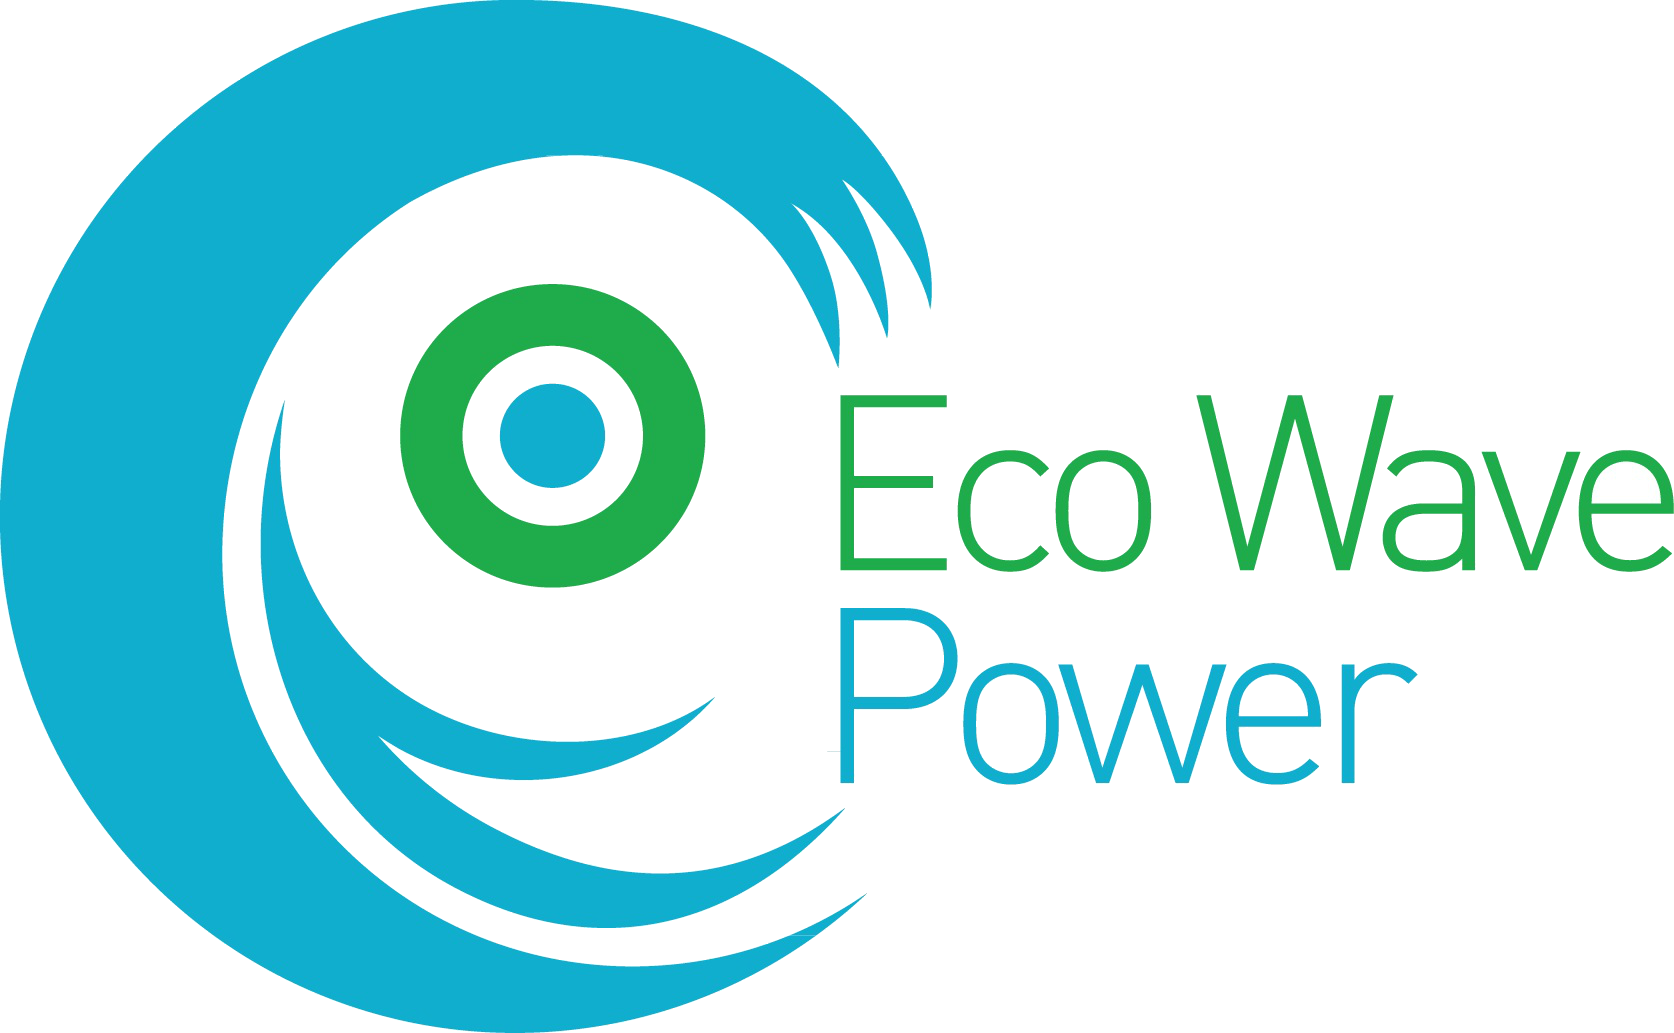 Eco Wave Power